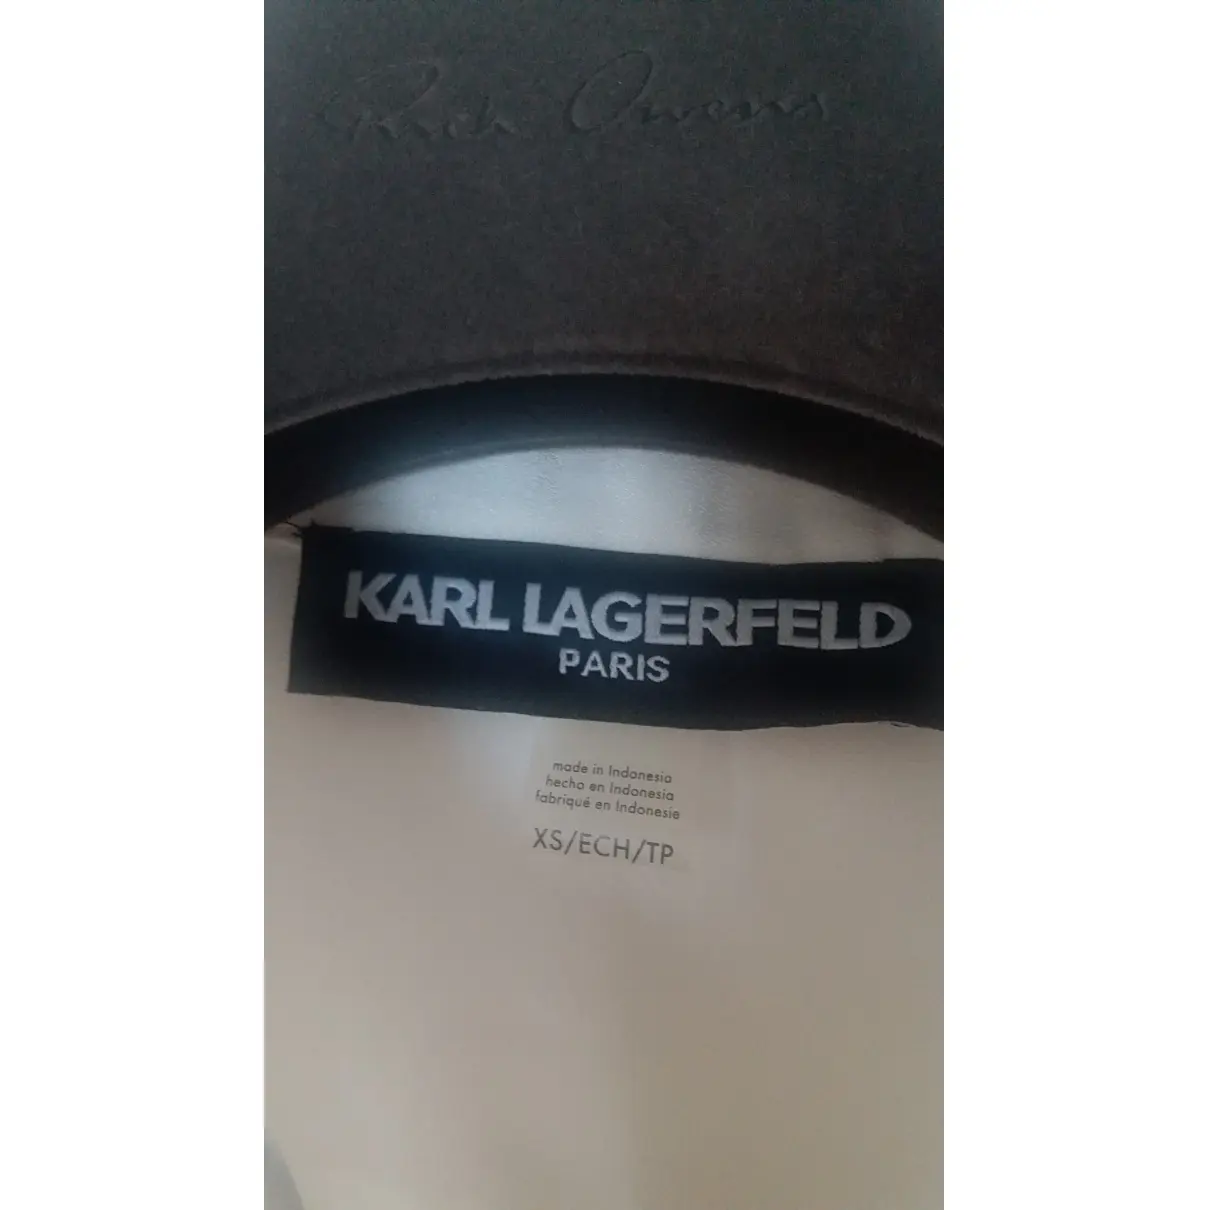 Buy Karl Lagerfeld Shirt online